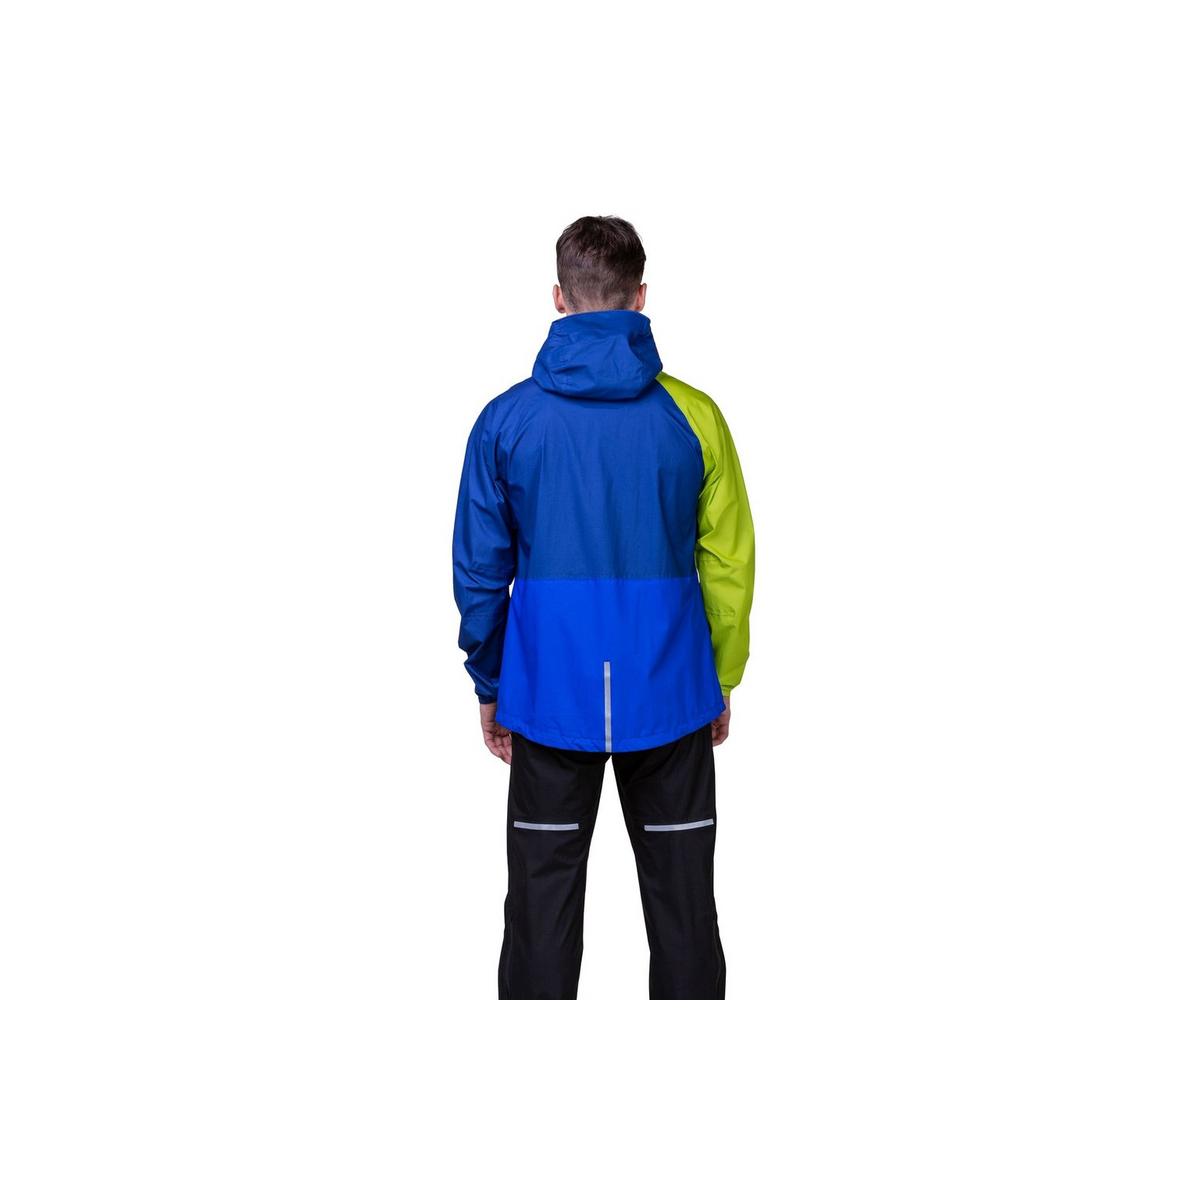 Ronhill Men's Tech Fortify Jacket - Blue / Yellow